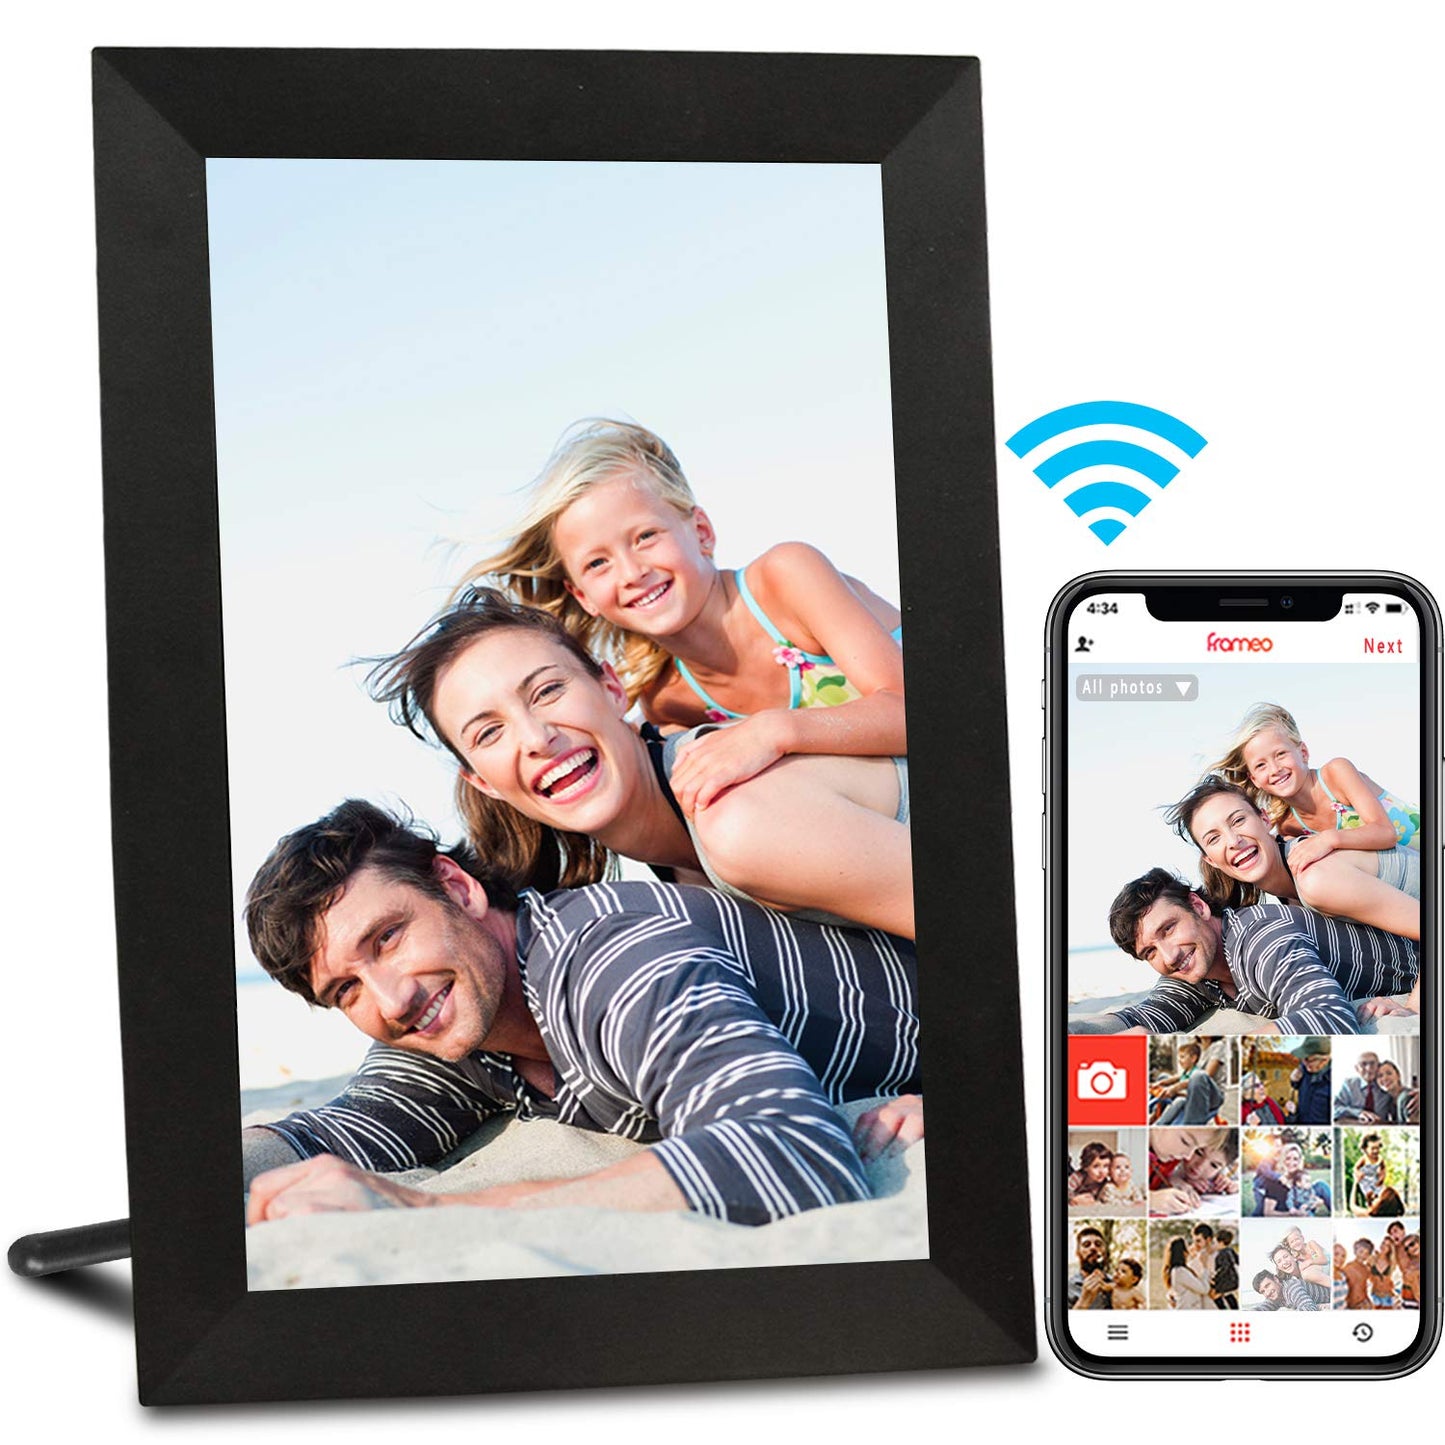 WiFi Touch Screen Smart Photo Frame 16GB Storage Easy Setup to Share Photos or Videos via Frameo APP, Auto-Rotate, Wall Mount (9 inch Black)